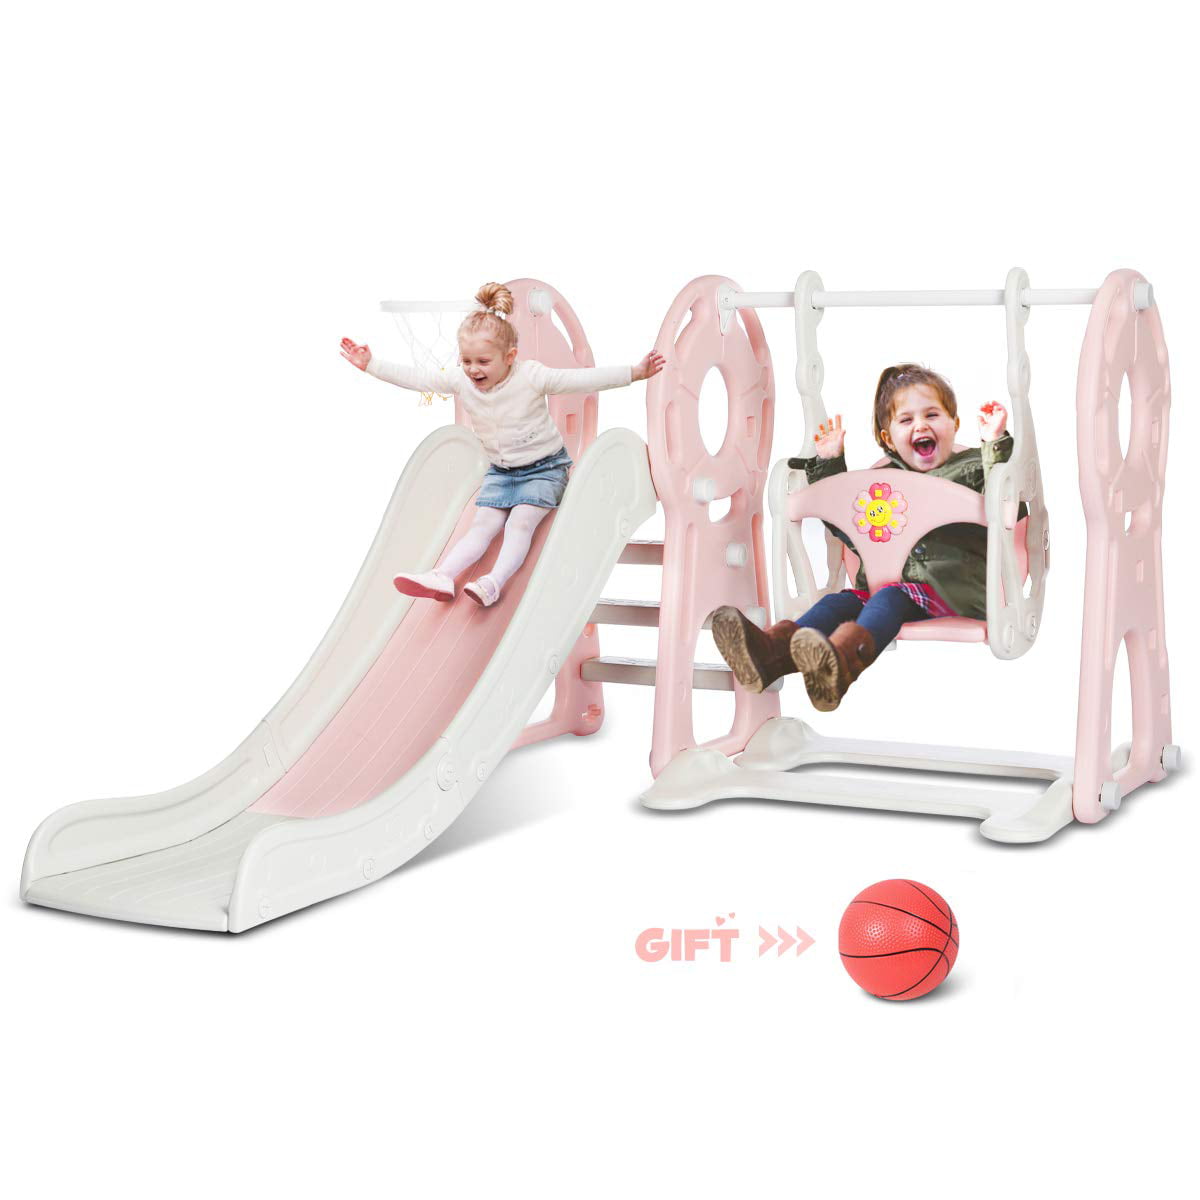 Toddler Climber Slide Play Swing Set Kids Indoor Outdoor Playground Play Set 008 